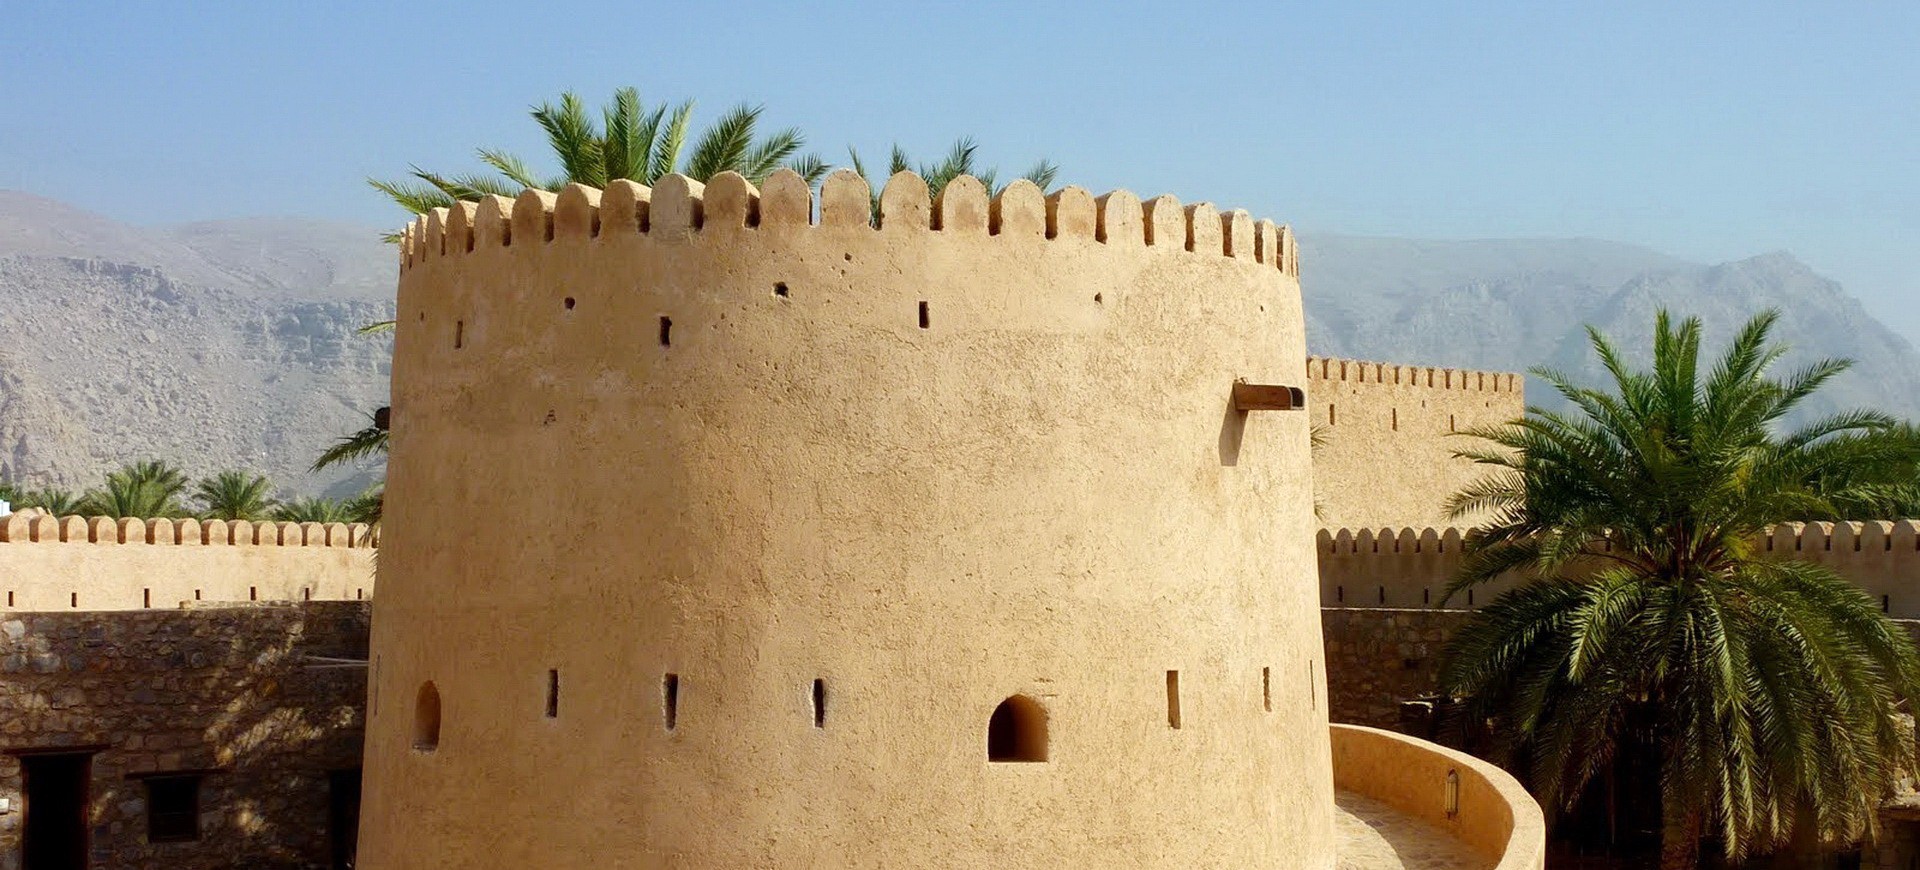 Oman Khasab Fort